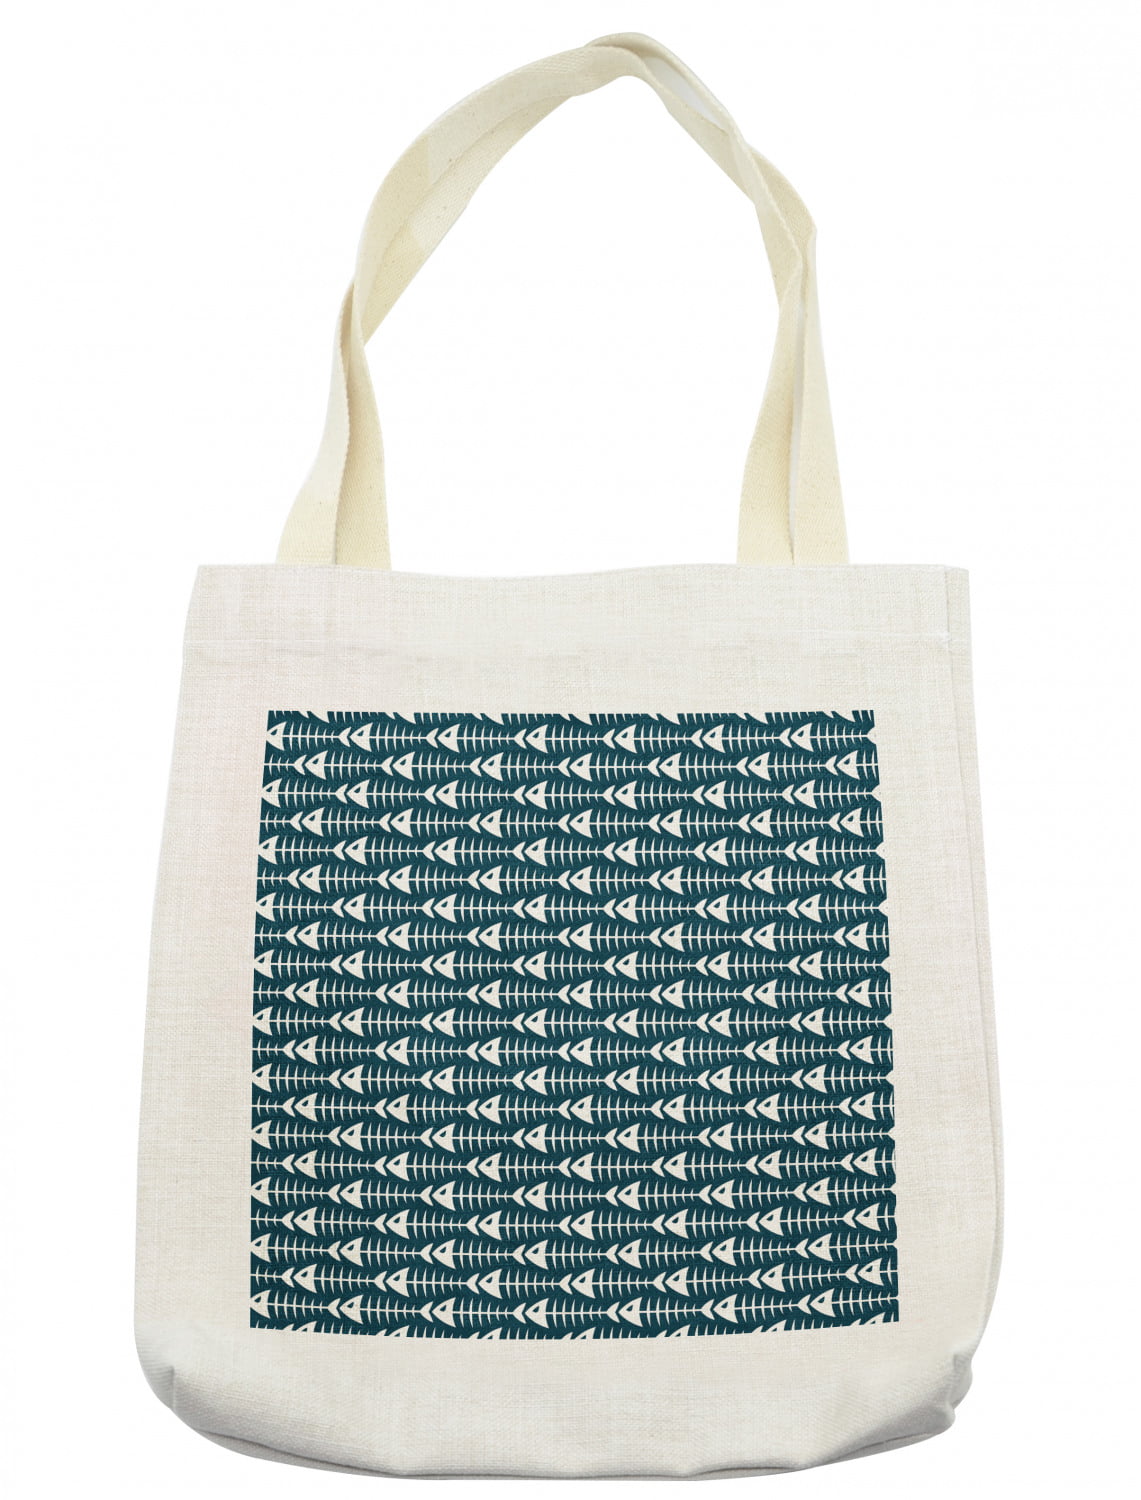 100% Organic Cotton eco-friendly tote bag skellington Bags & Purses Handbags Top Handle Bags halloween tote bag adult humour 